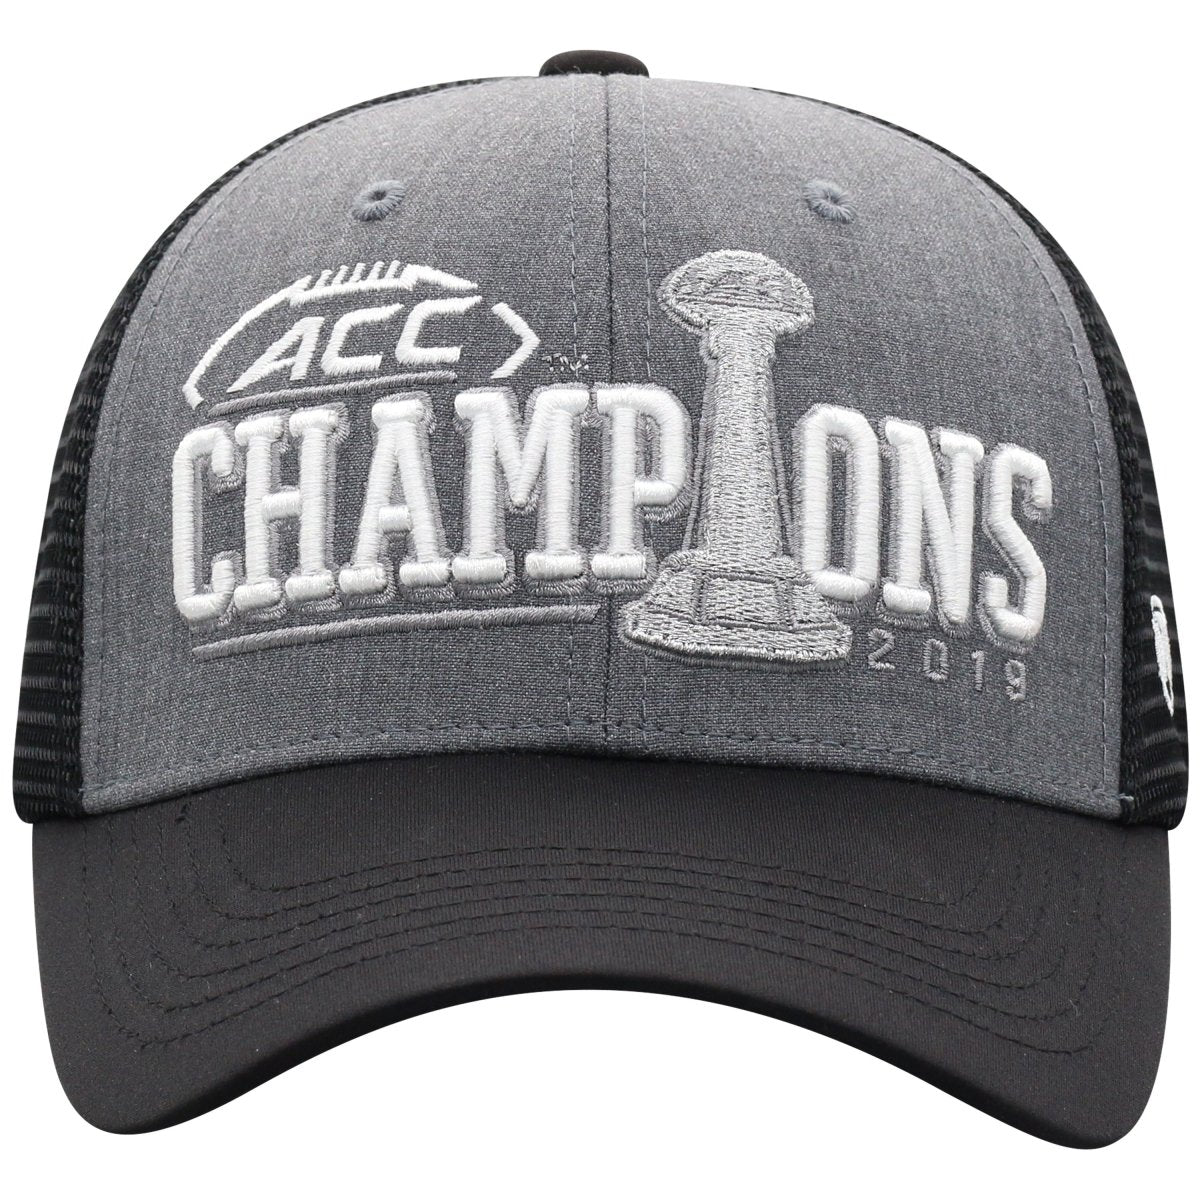 2019 Acc Champions Snapback Hat 